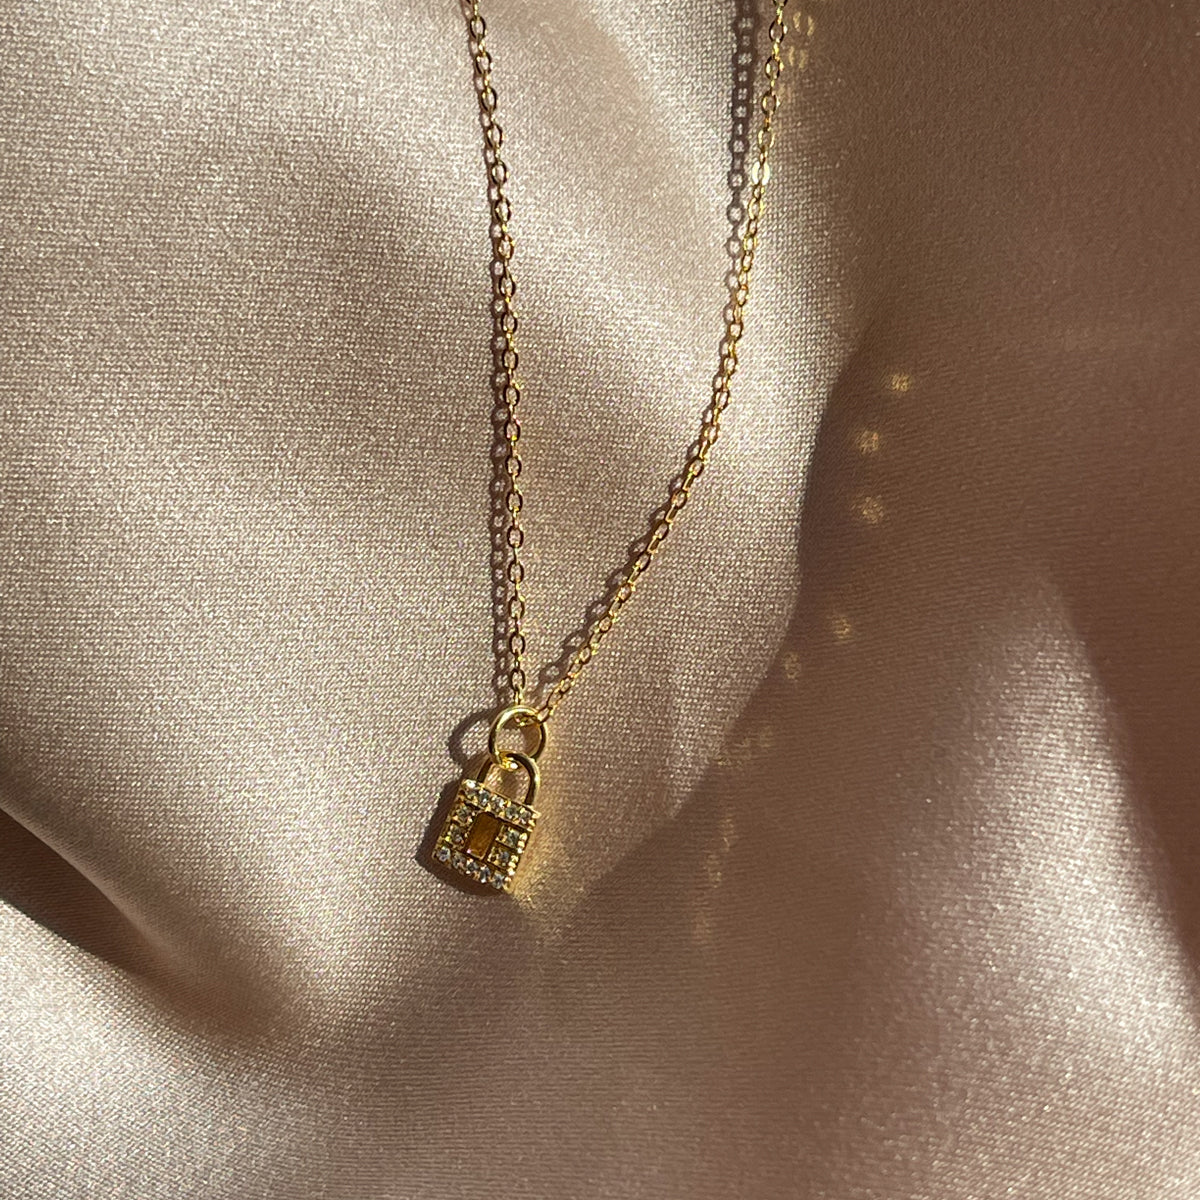 Locked Up Vermeil Necklace | Gold Vermeil | Product Image | Uncommon James